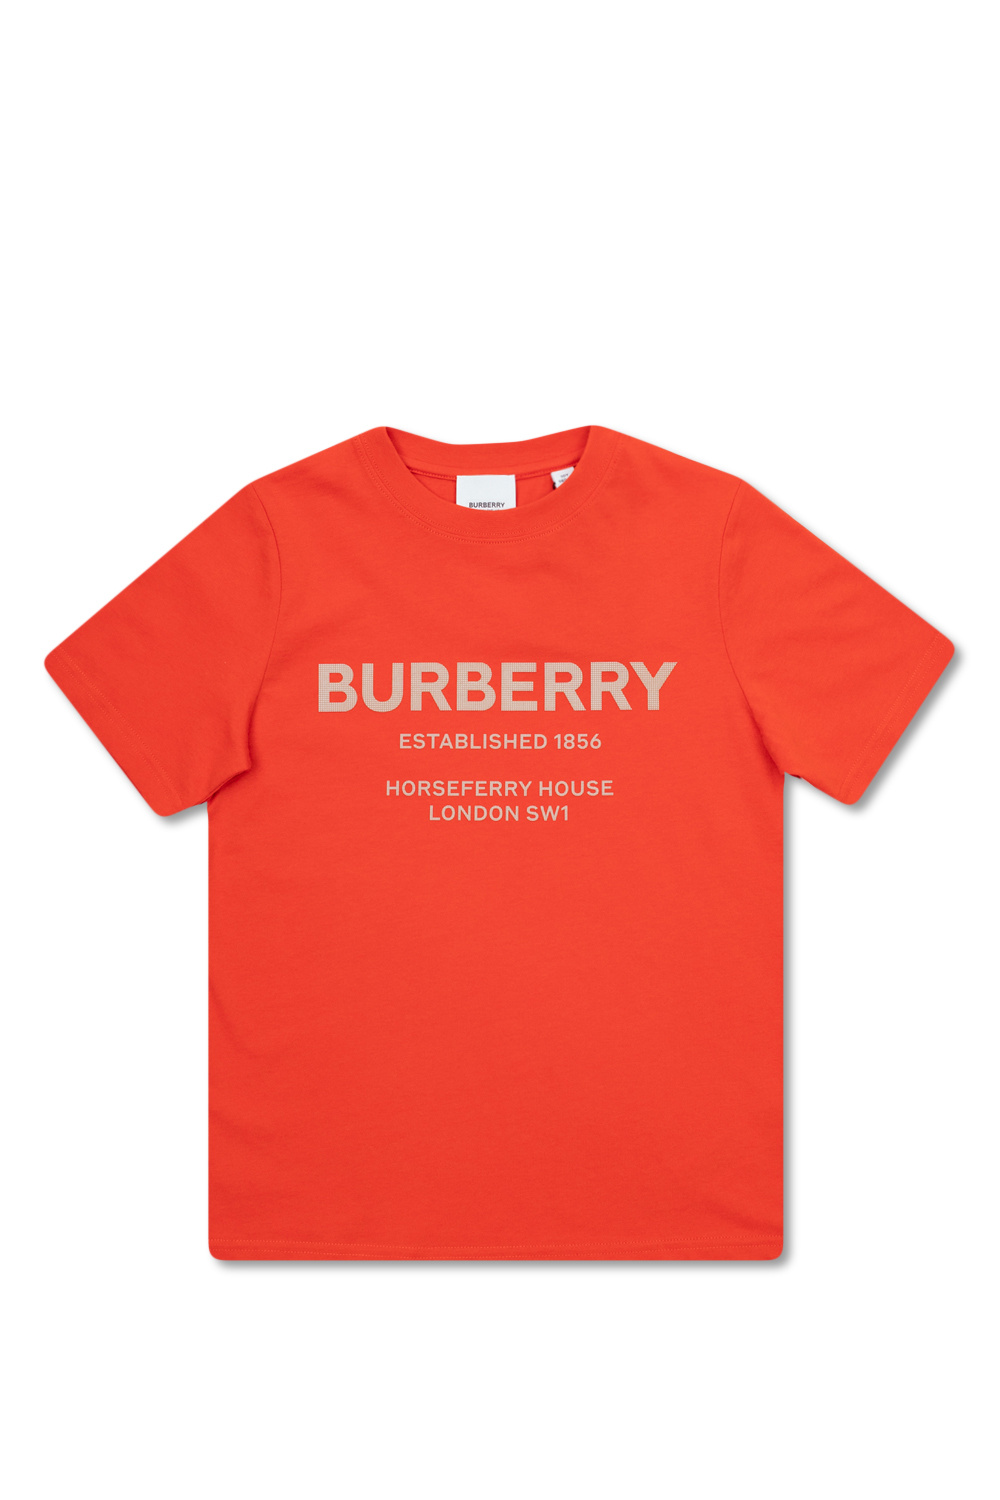 Burberry Kids Girls Mini Me Orange Beige Monogram Shirt Dress